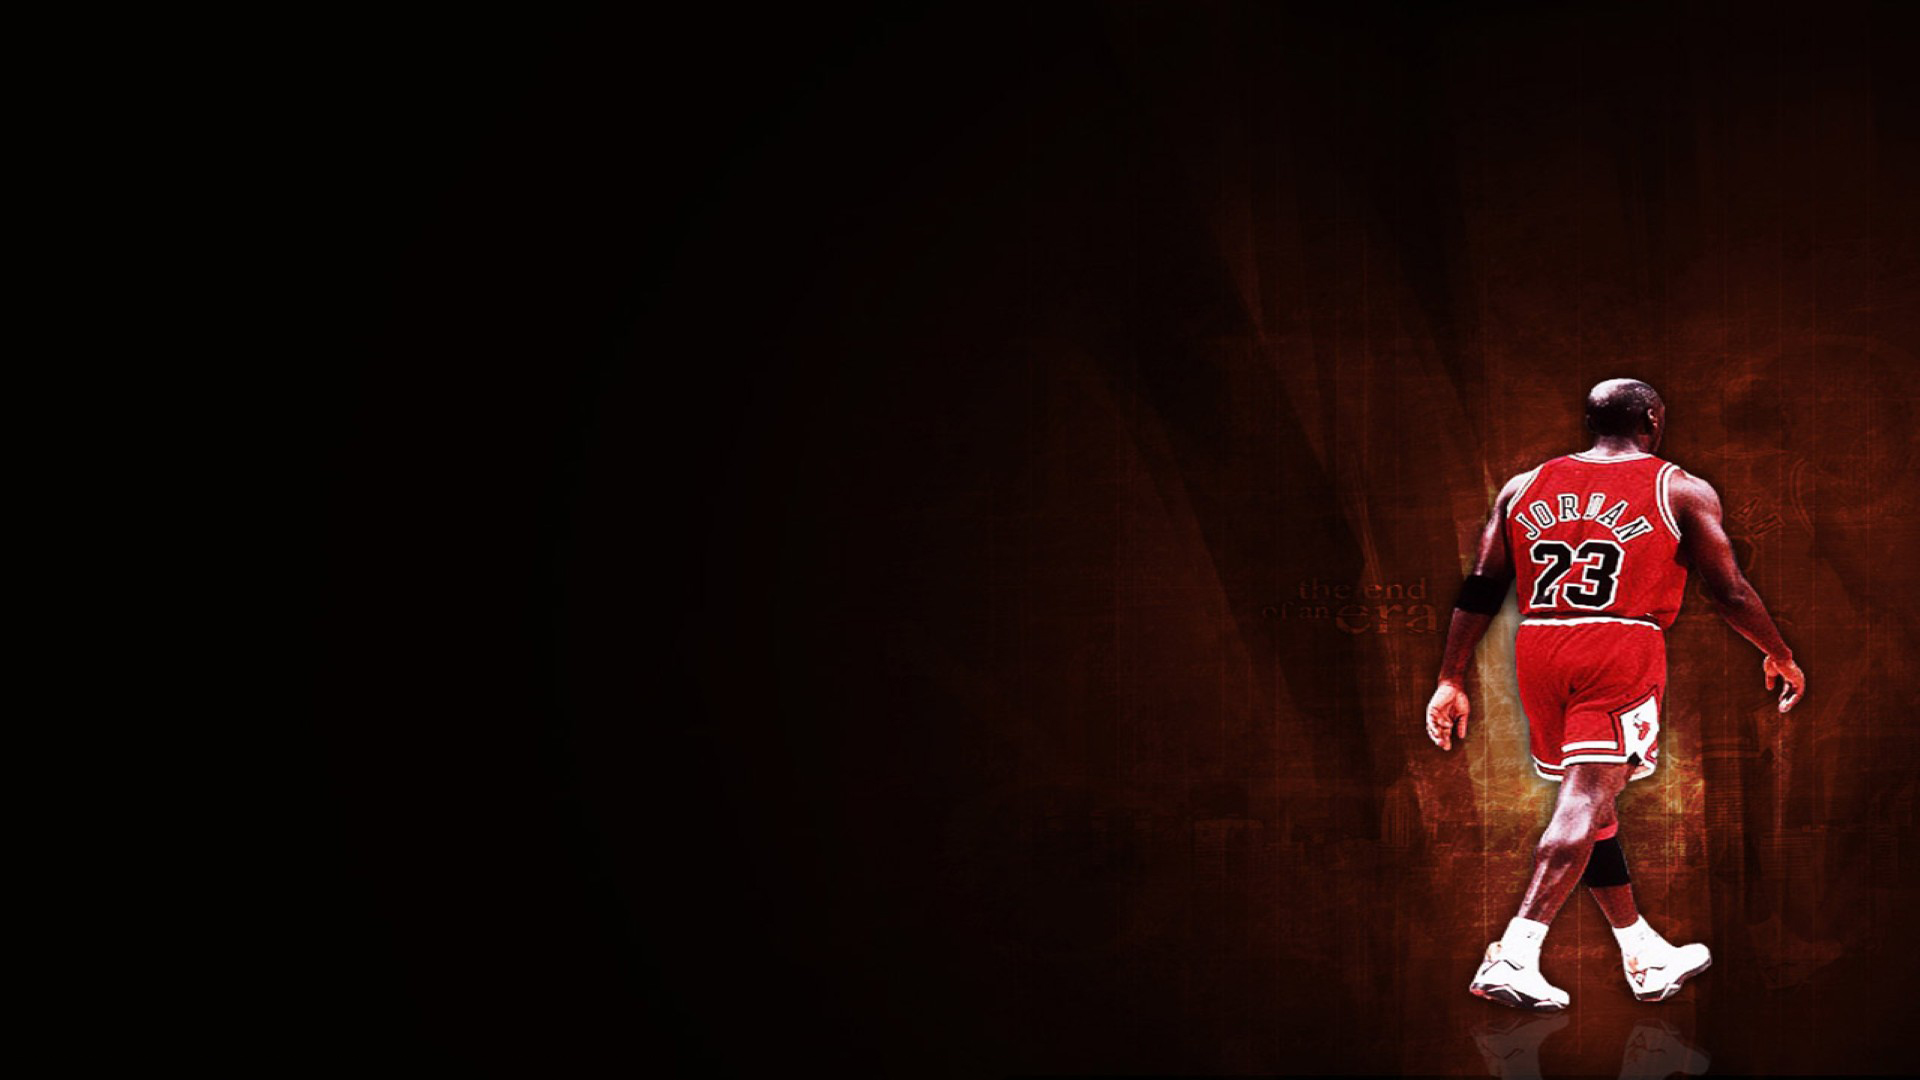 Free Michael Jordan HD Backgrounds Download Wallpapercraft